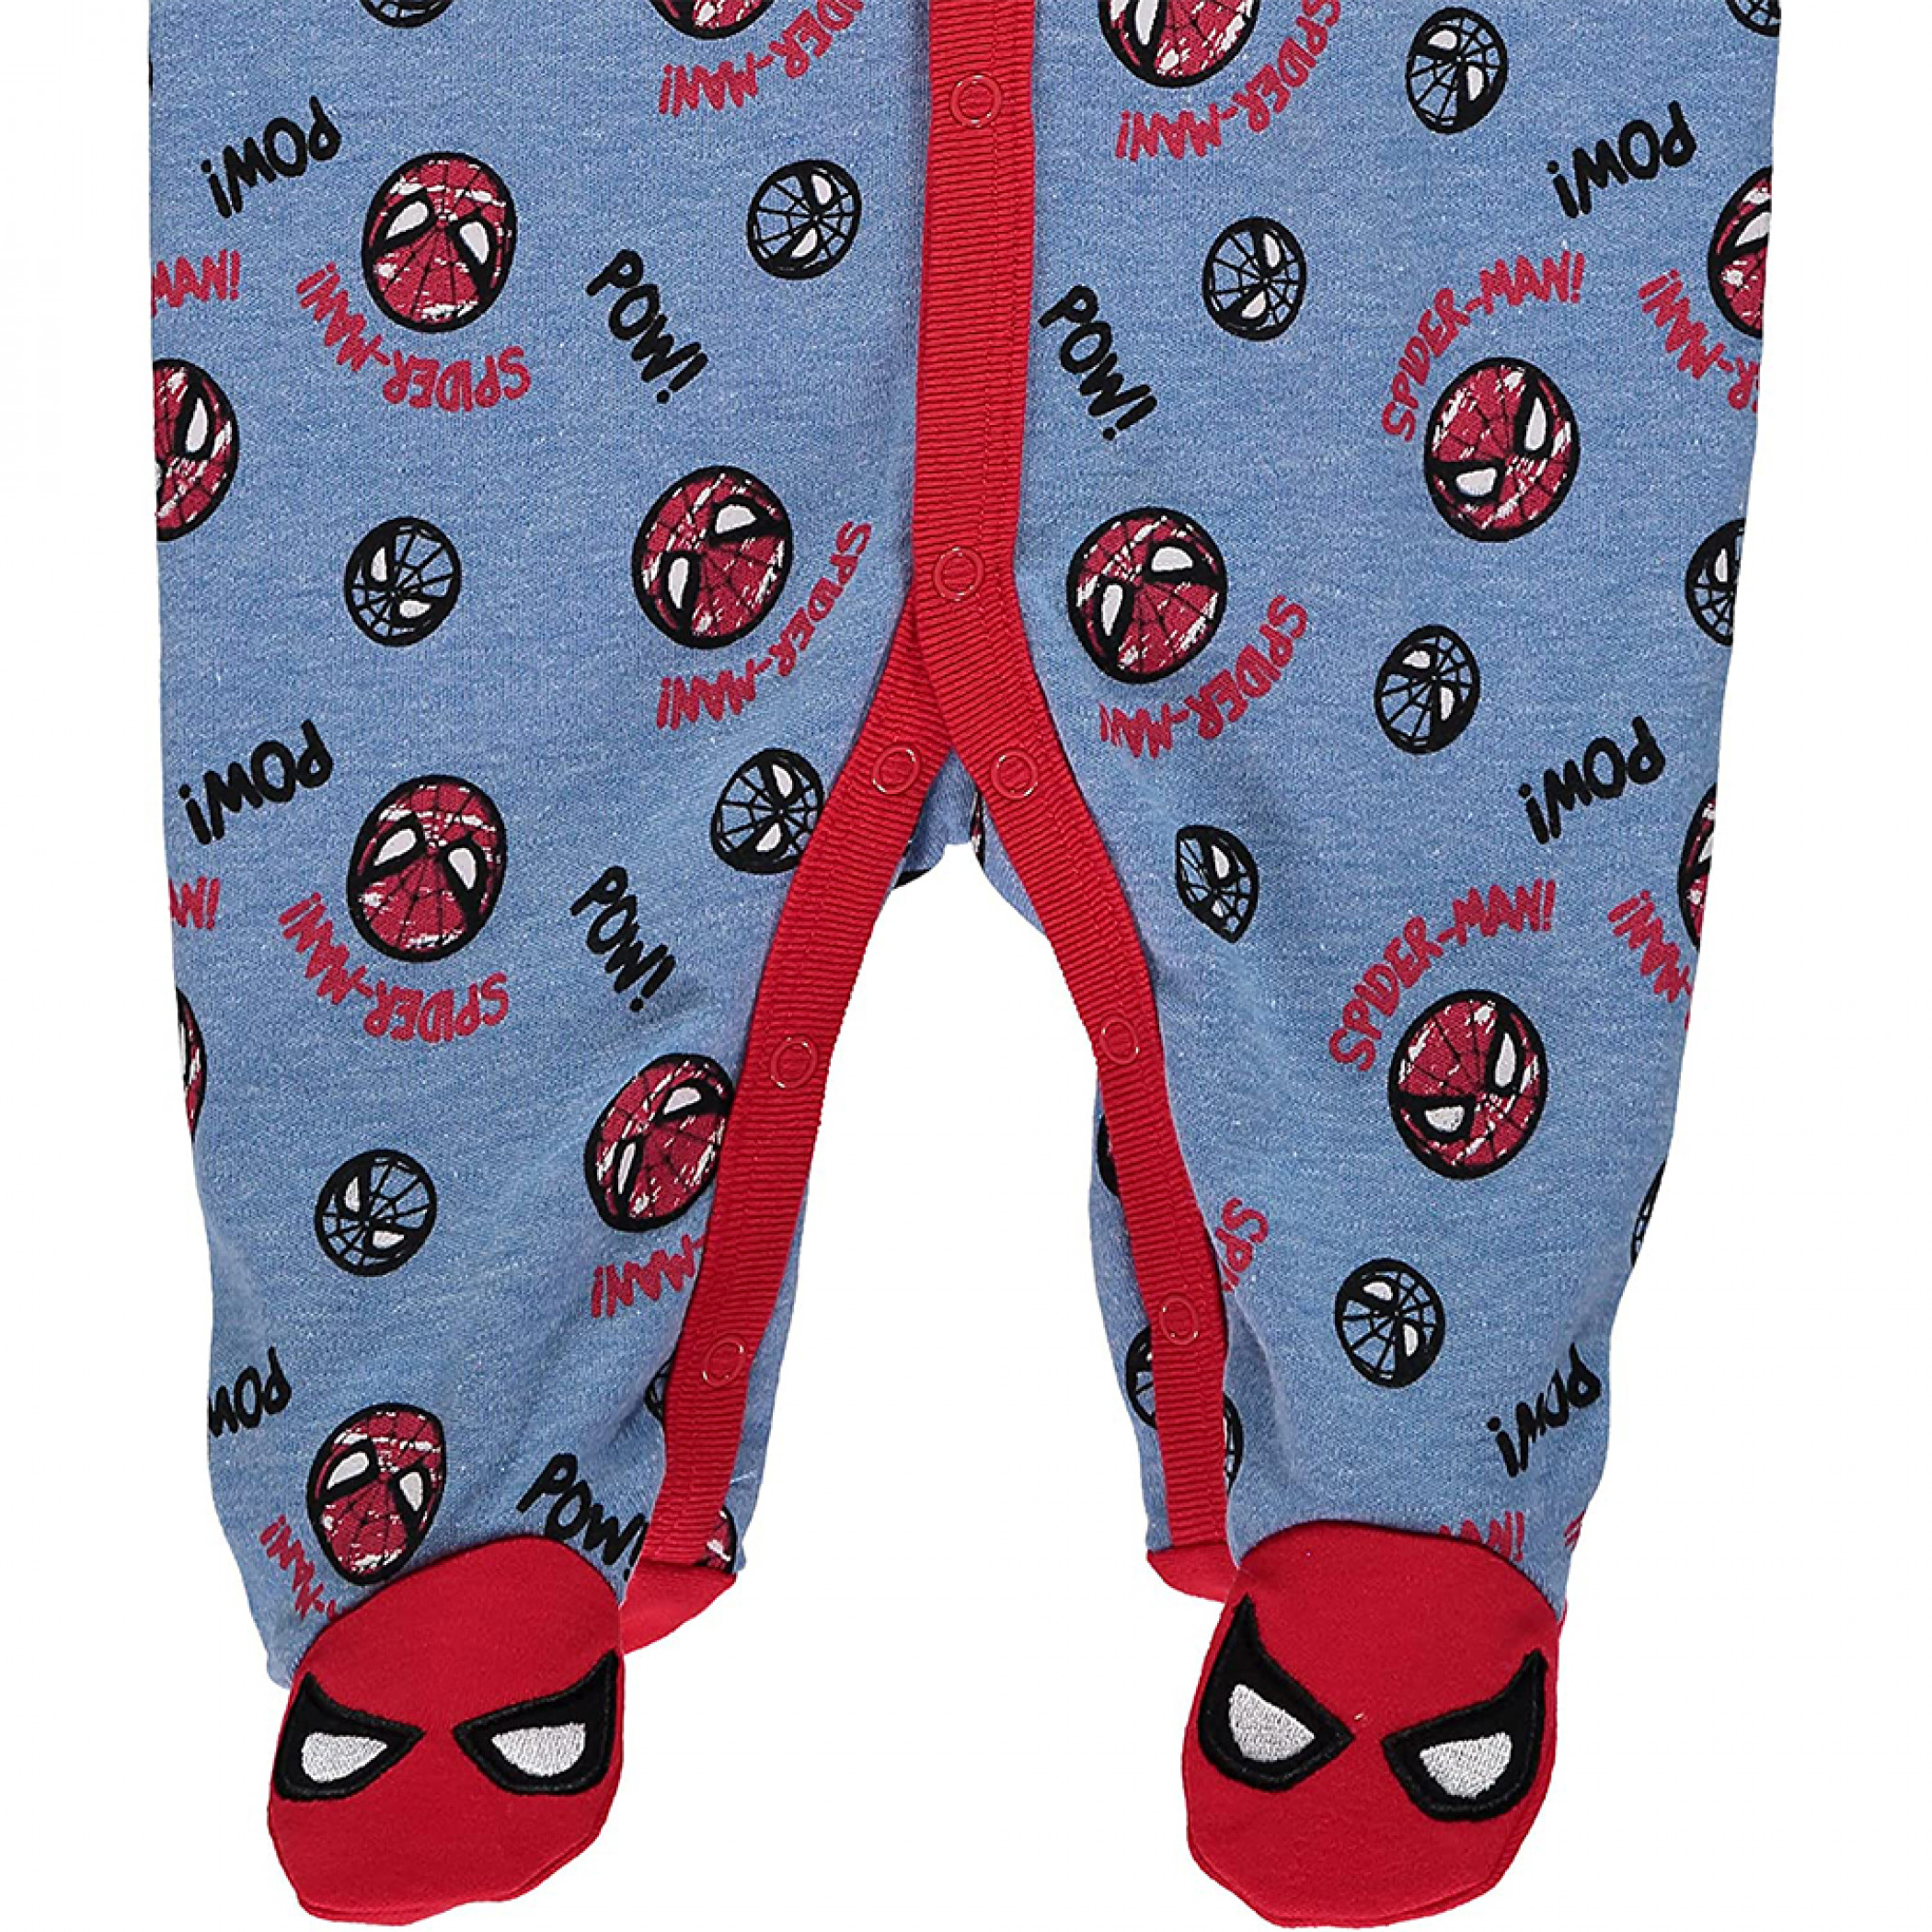 Marvel Spider-Man Face Symbols Infant Footed Pajamas